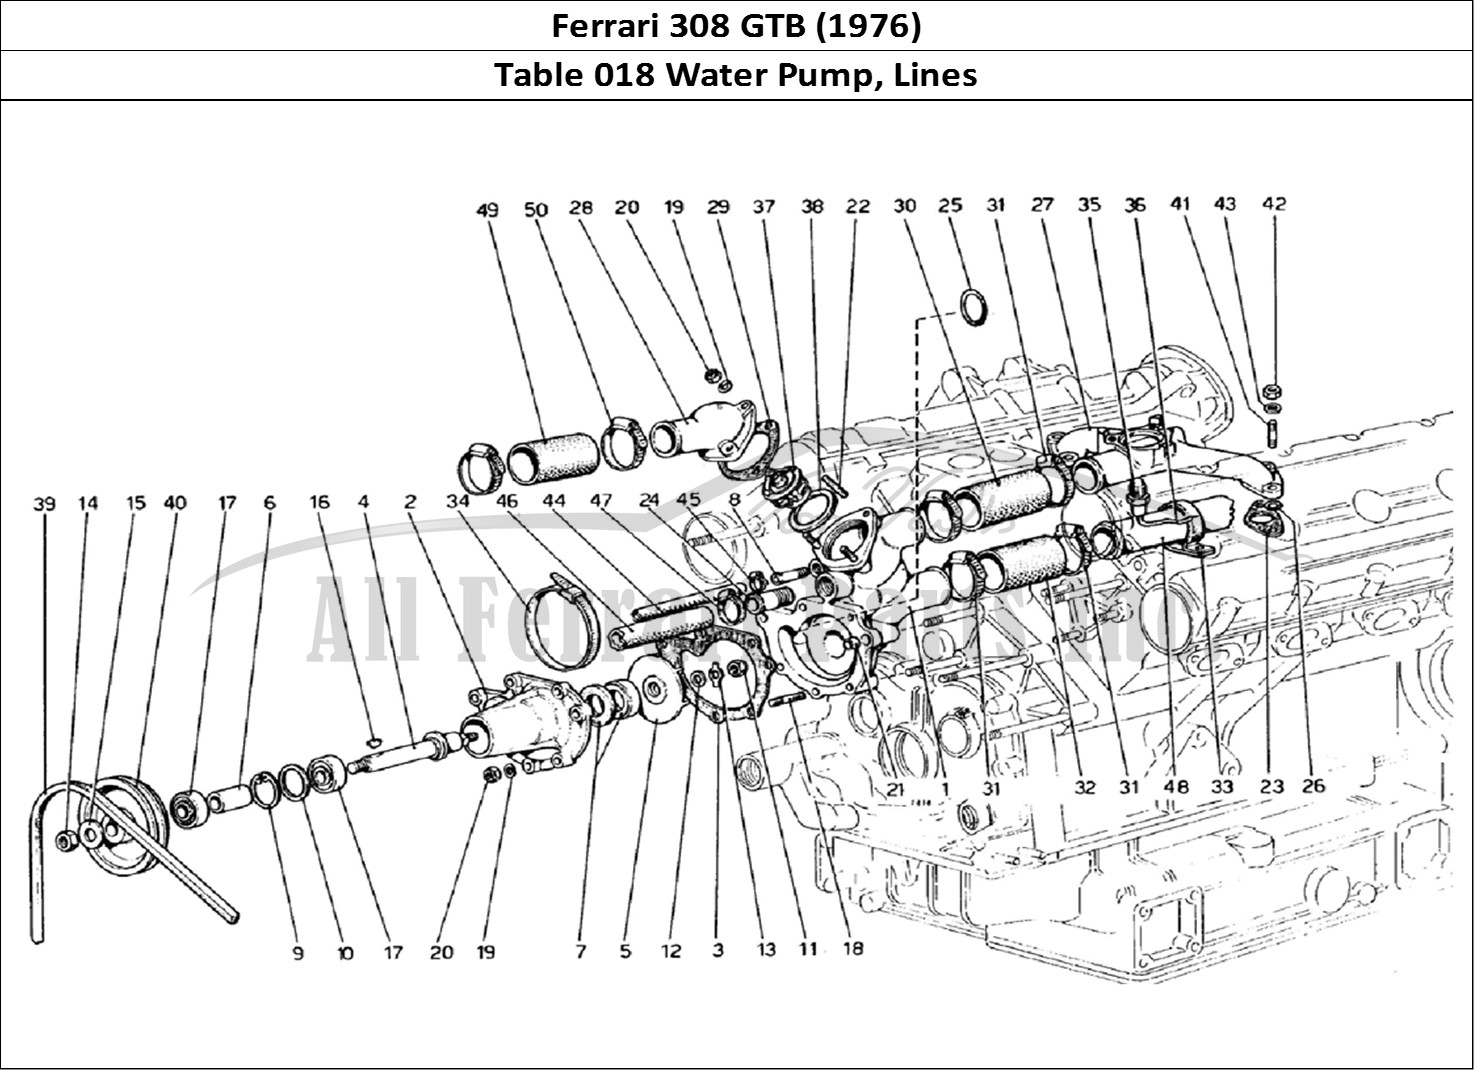 Ferrari Parts Ferrari 308 GTB (1976) Page 018 Water Pump and Pipings